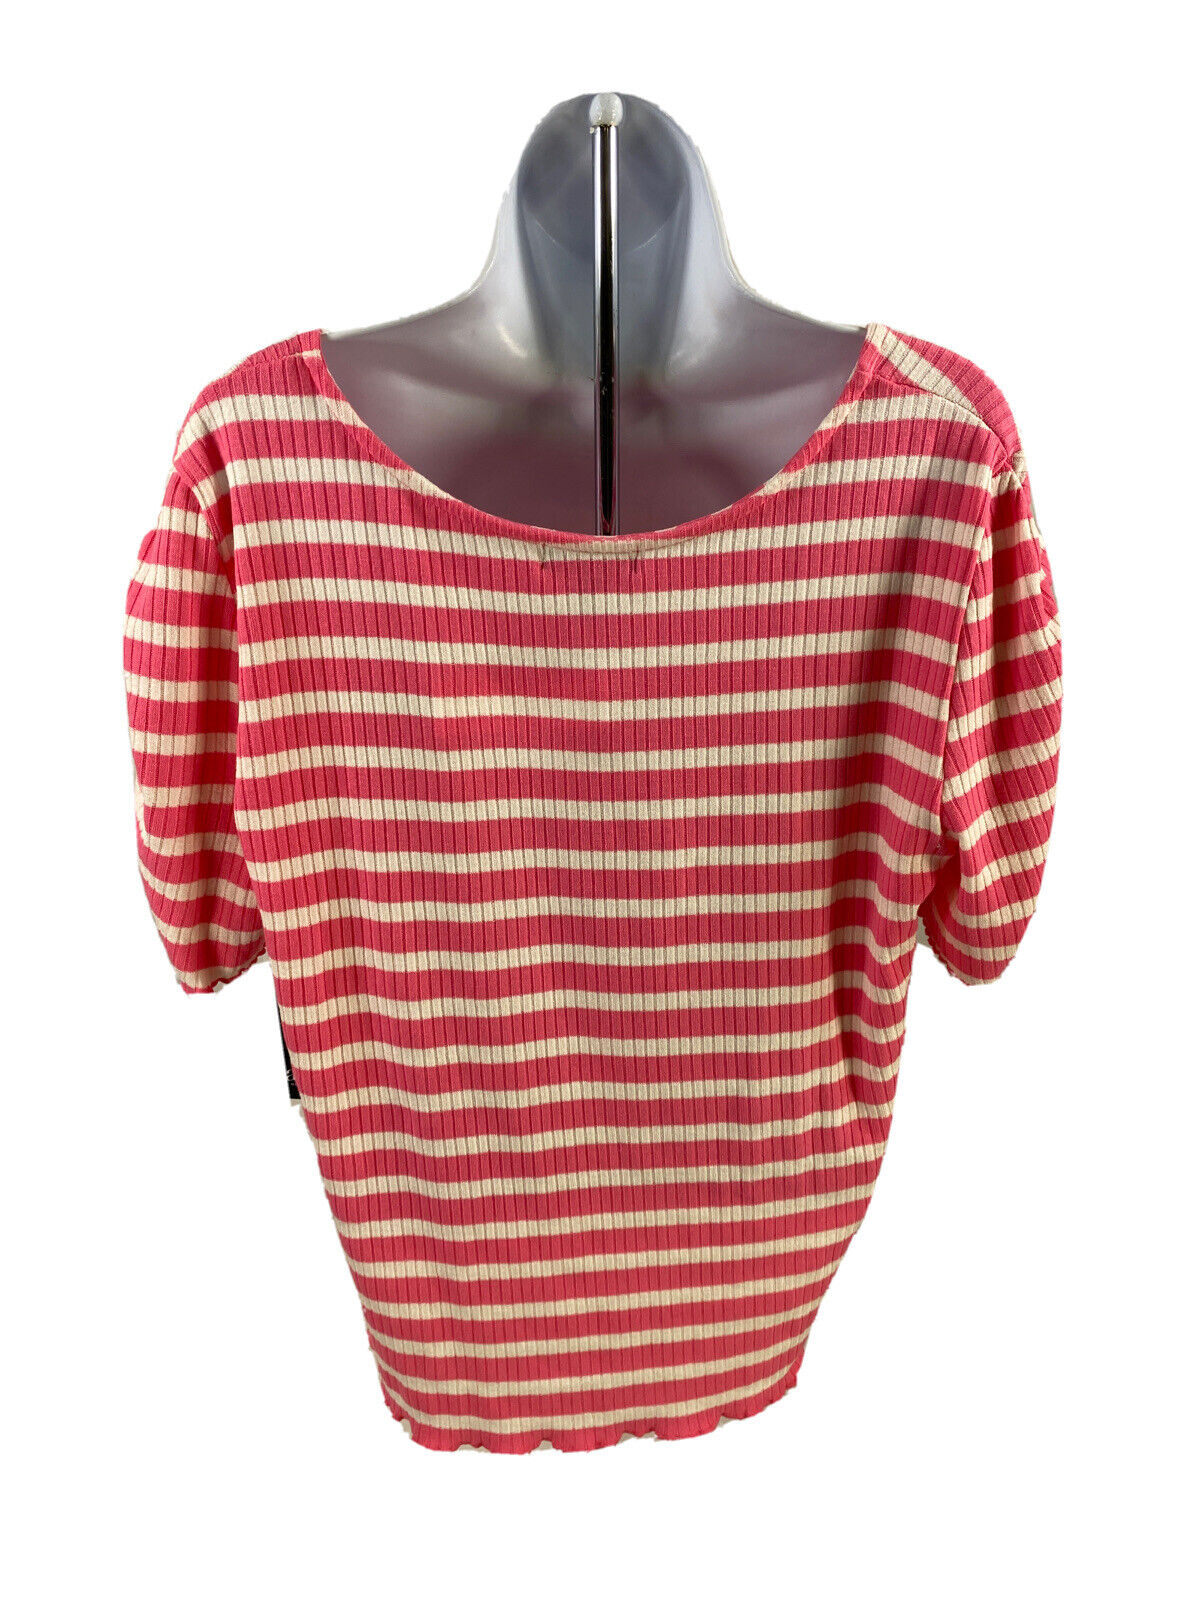 NEW ANA Women's Pink/White Striped Short Sleeve Shirt - XXL